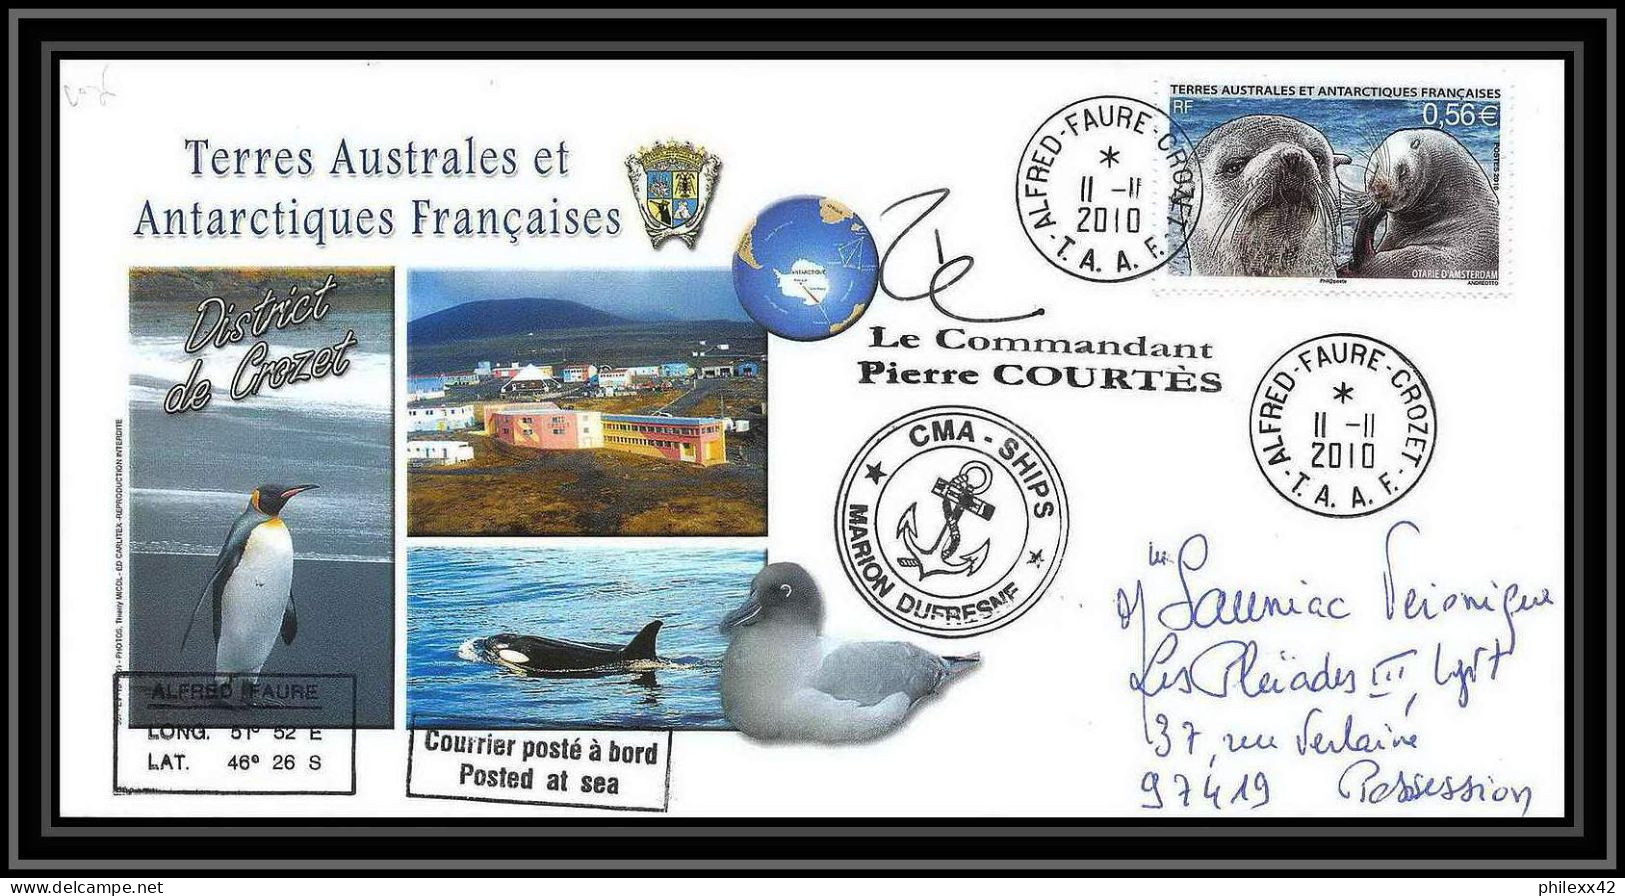 3034 Helilagon Dufresne Signé Signed Op 2010/3 Crozet 11/11/2010 N°569 Otarie Seal Terres Australes (taaf) Lettre Cover - Hubschrauber